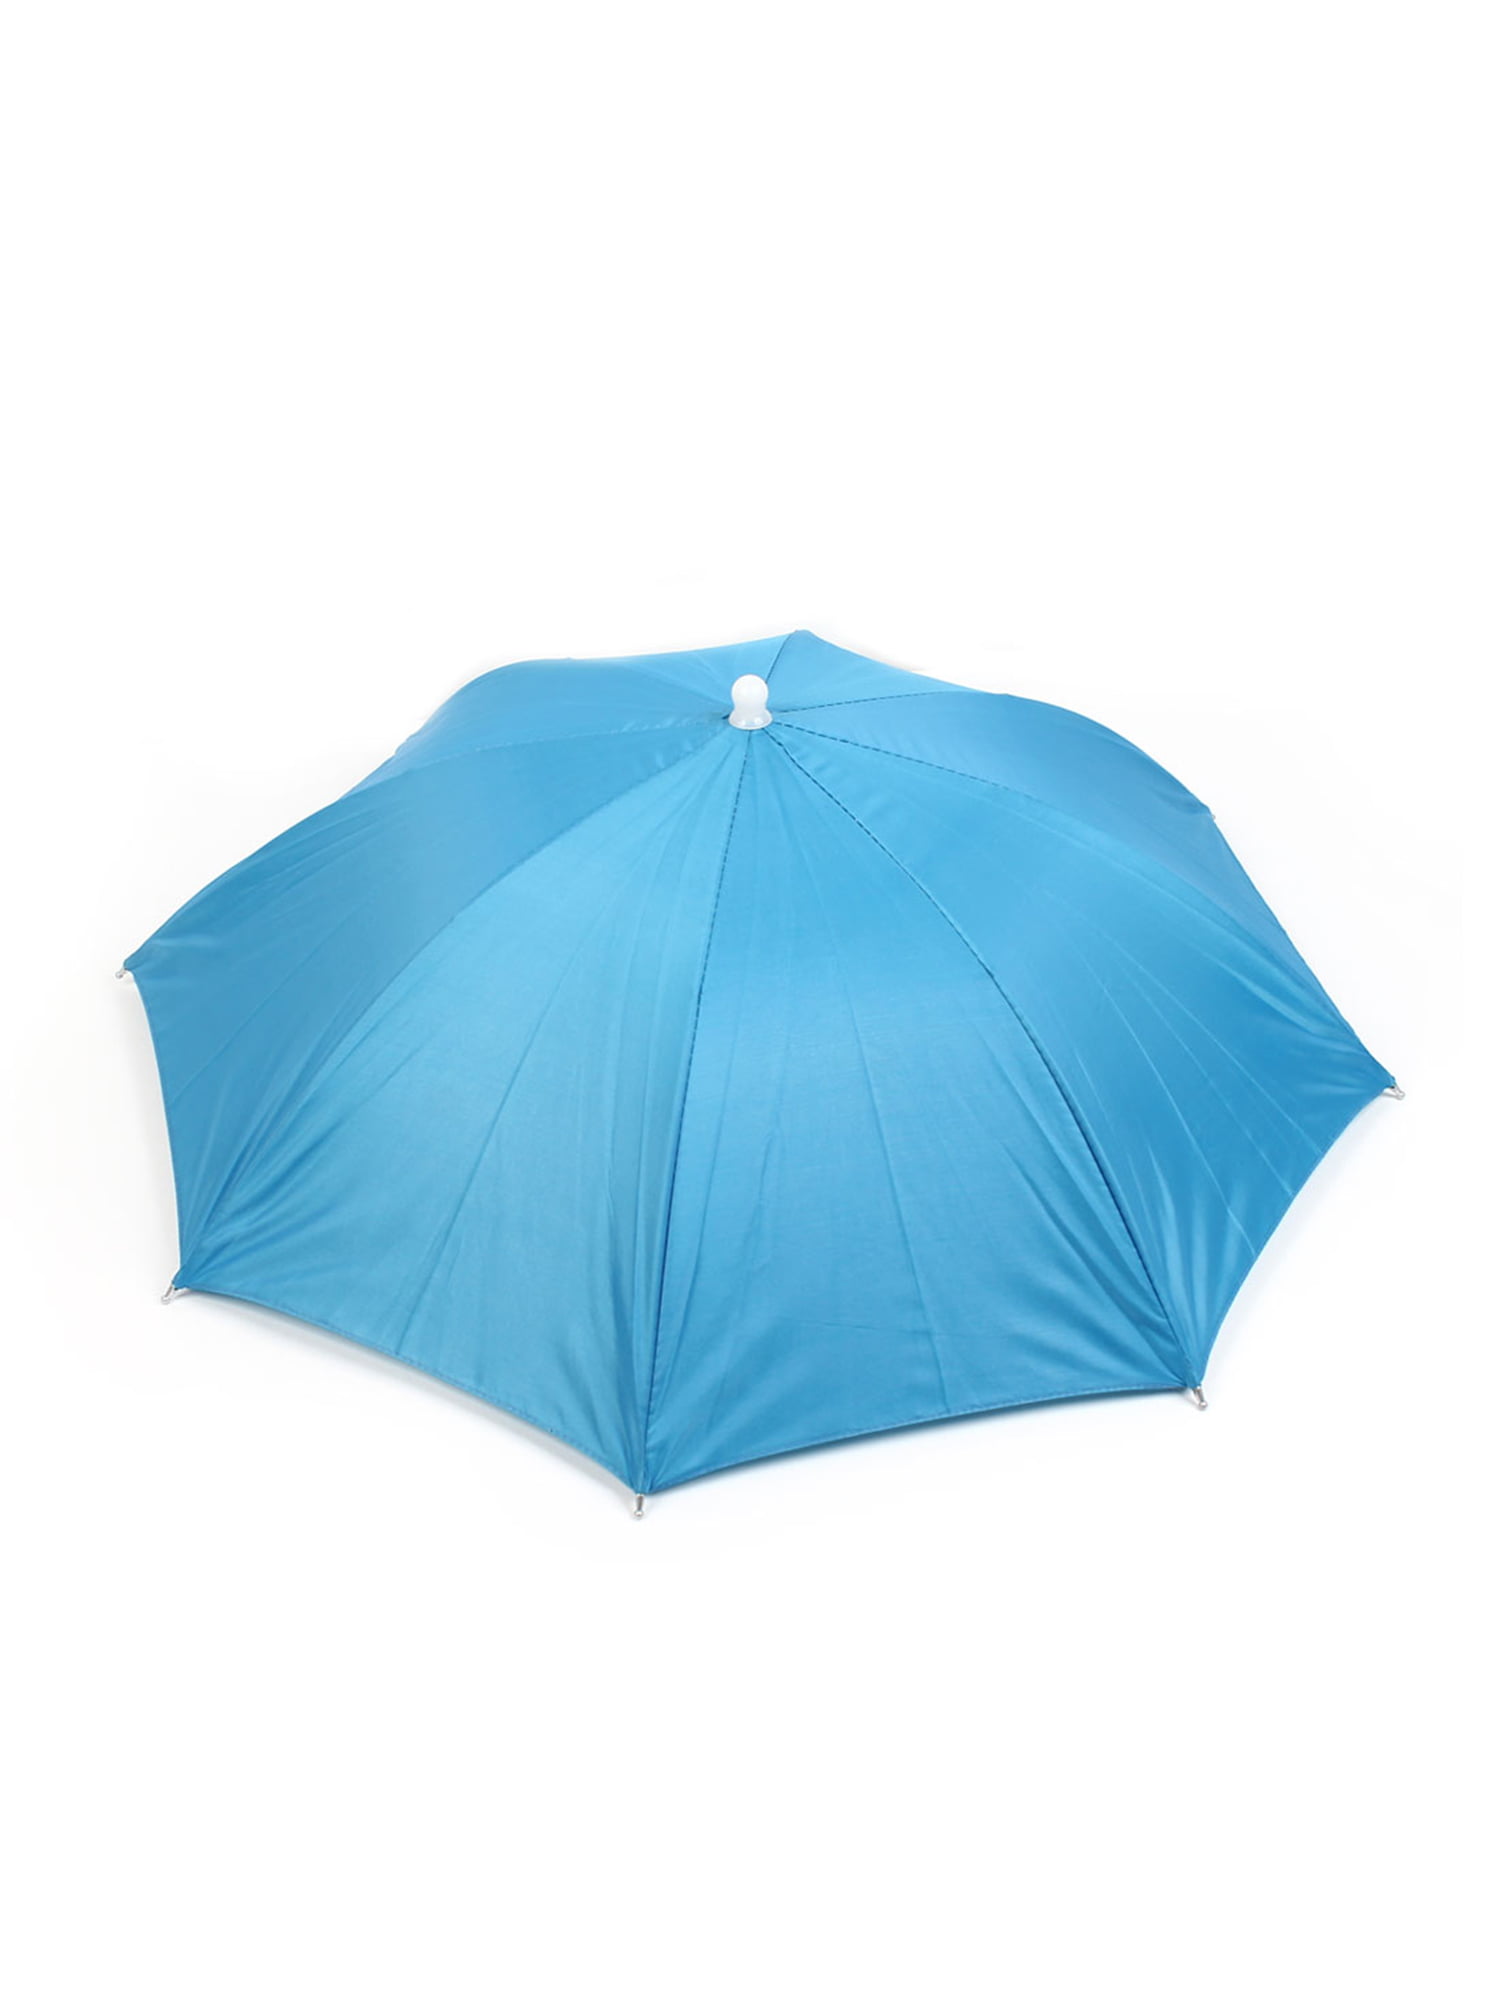 Quality Wooden Umbrella in Blue Accessories Umbrellas & Rain Accessories 